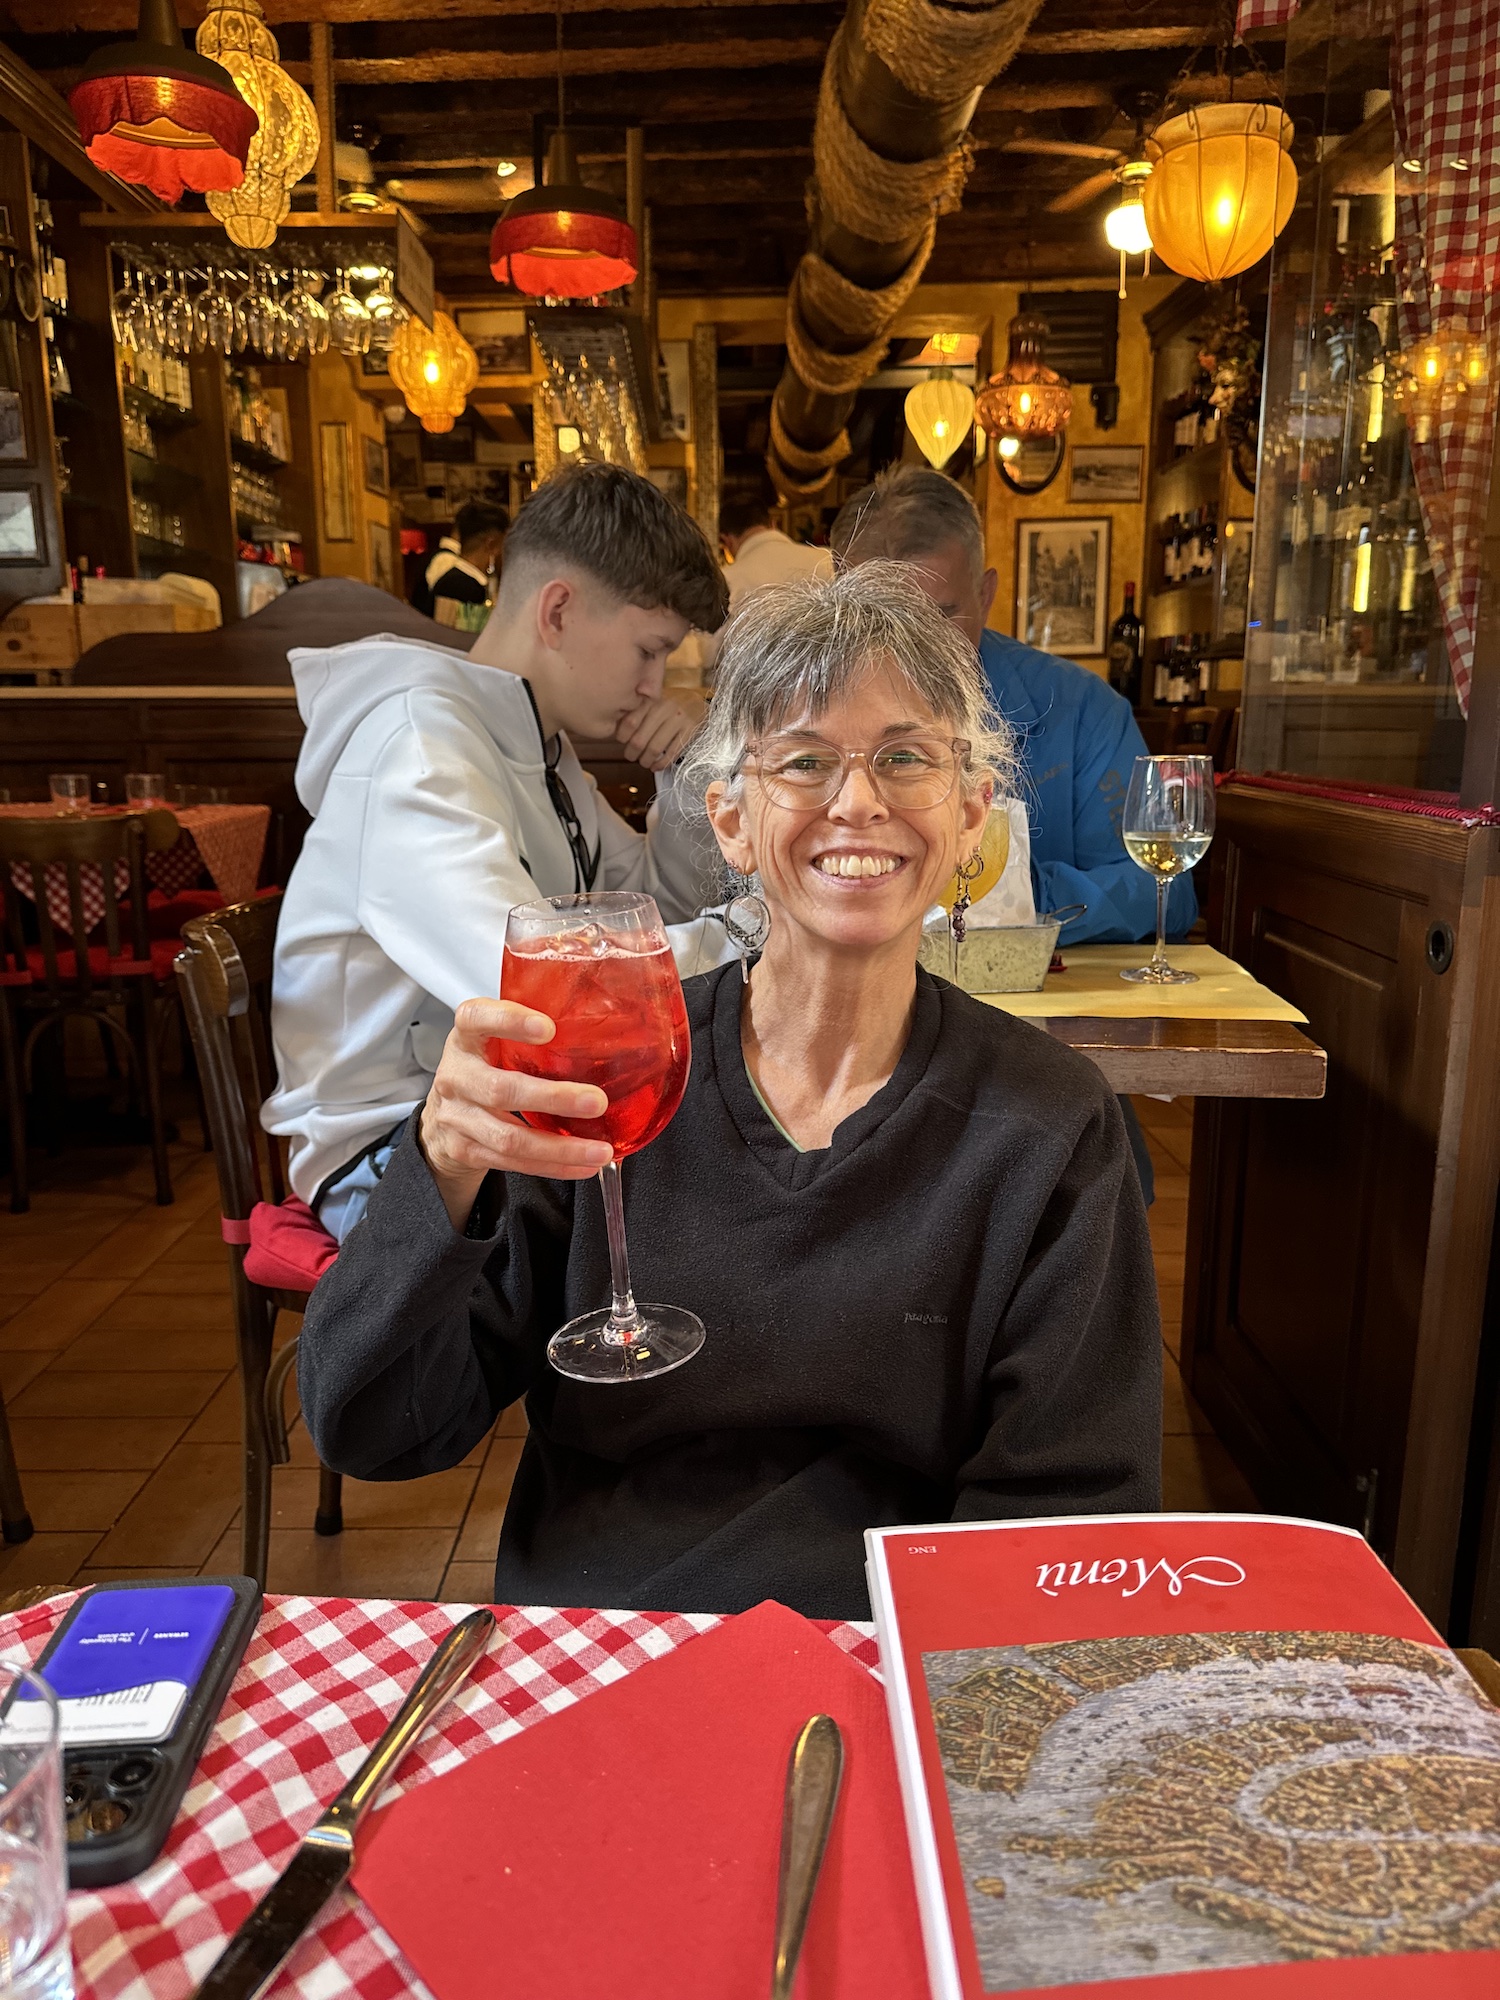 Nancy enjoying an Aperol Spritz.